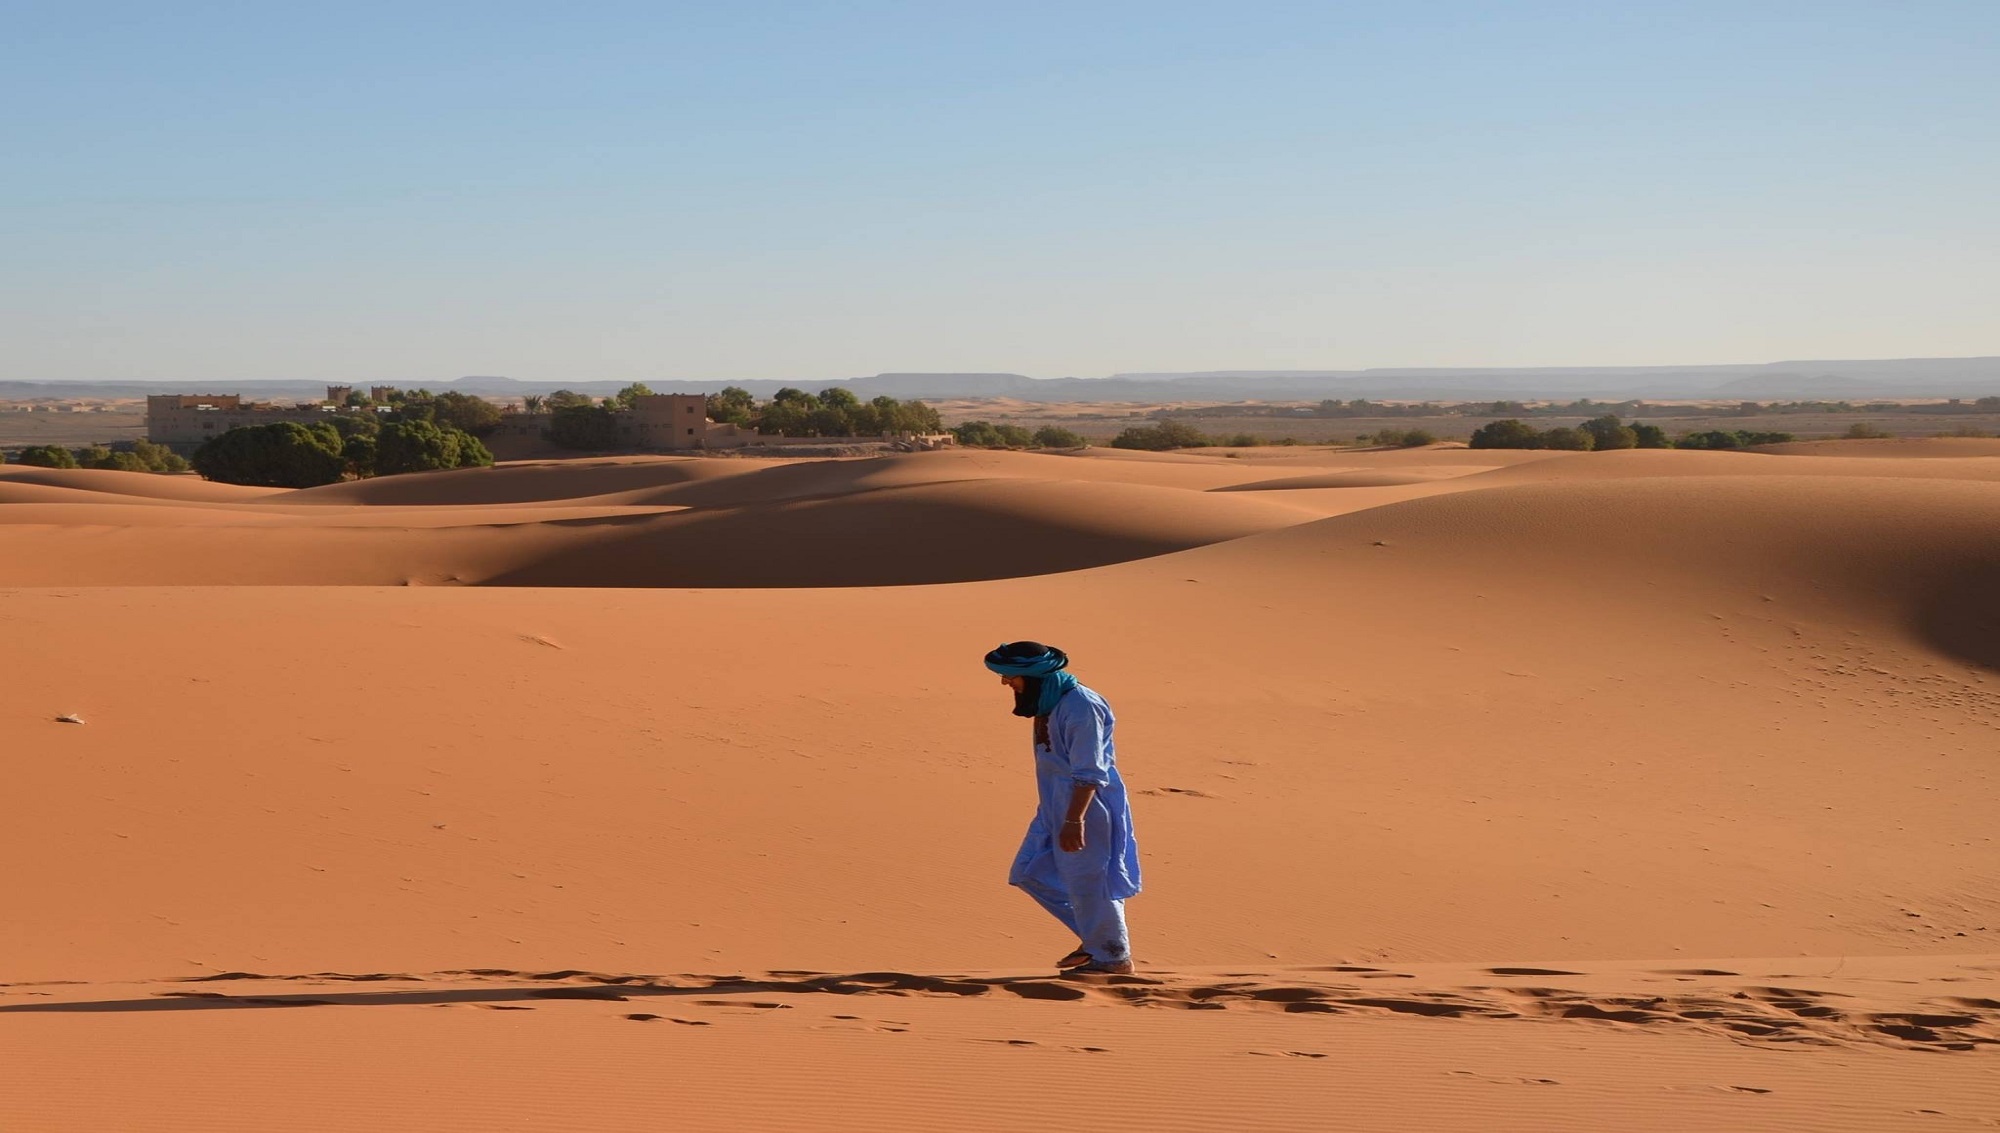 Grand morocco desert tour from Casablanca 10 days